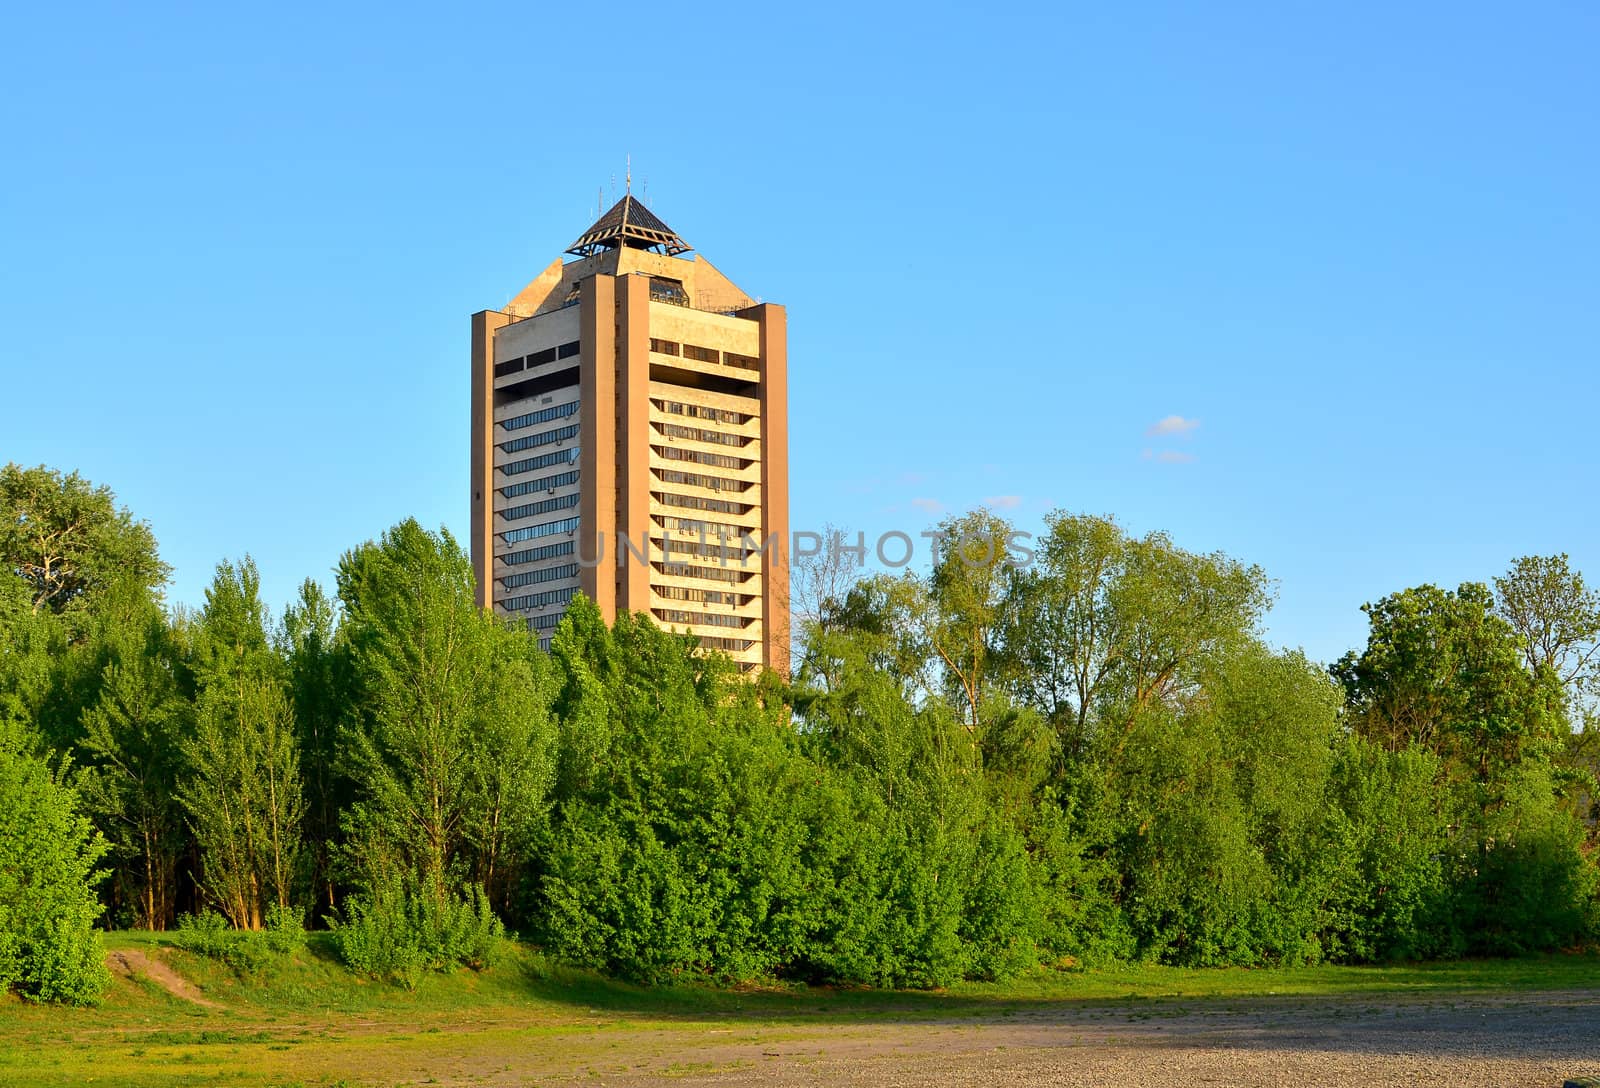 Building of the Ukrainian Television Center in Kiev by DNKSTUDIO